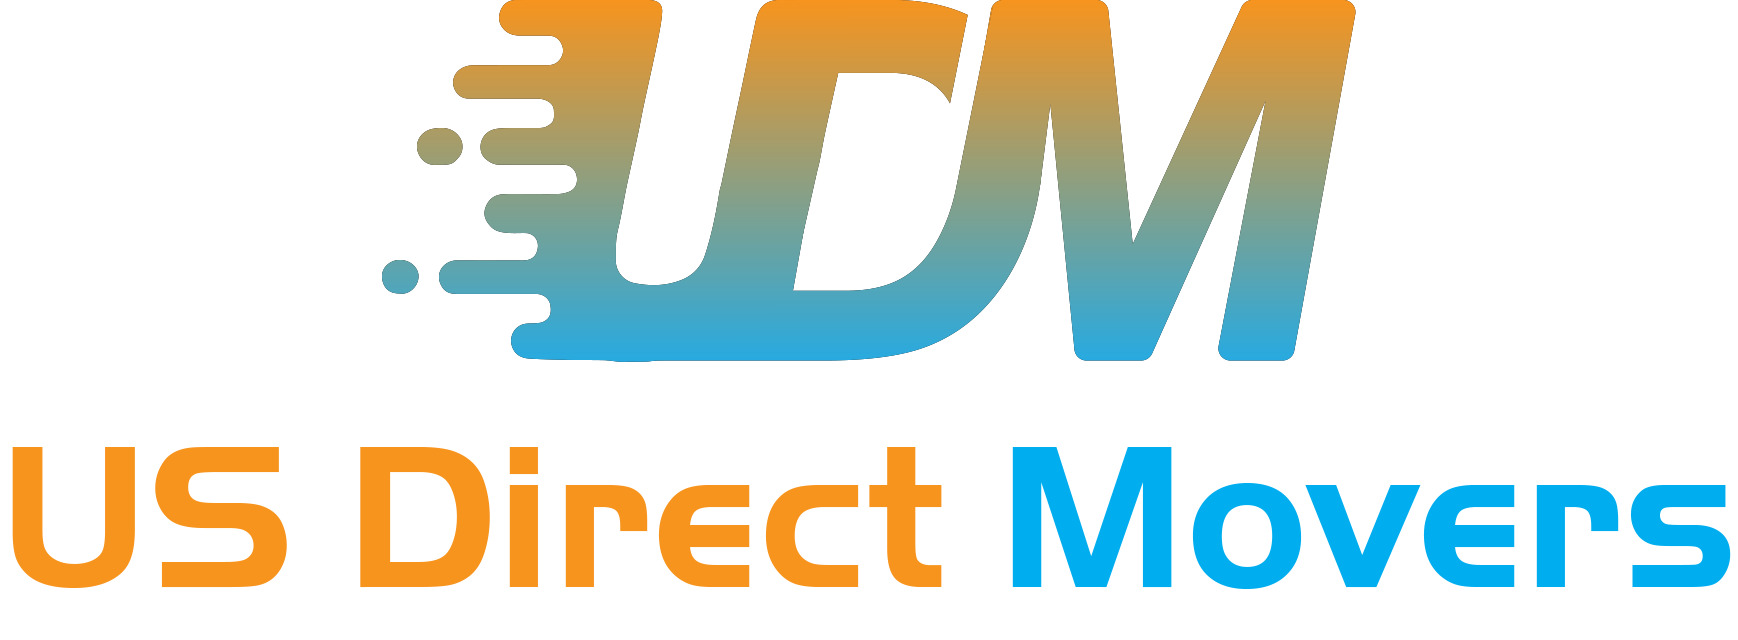 US Direct Movers, LLC Logo